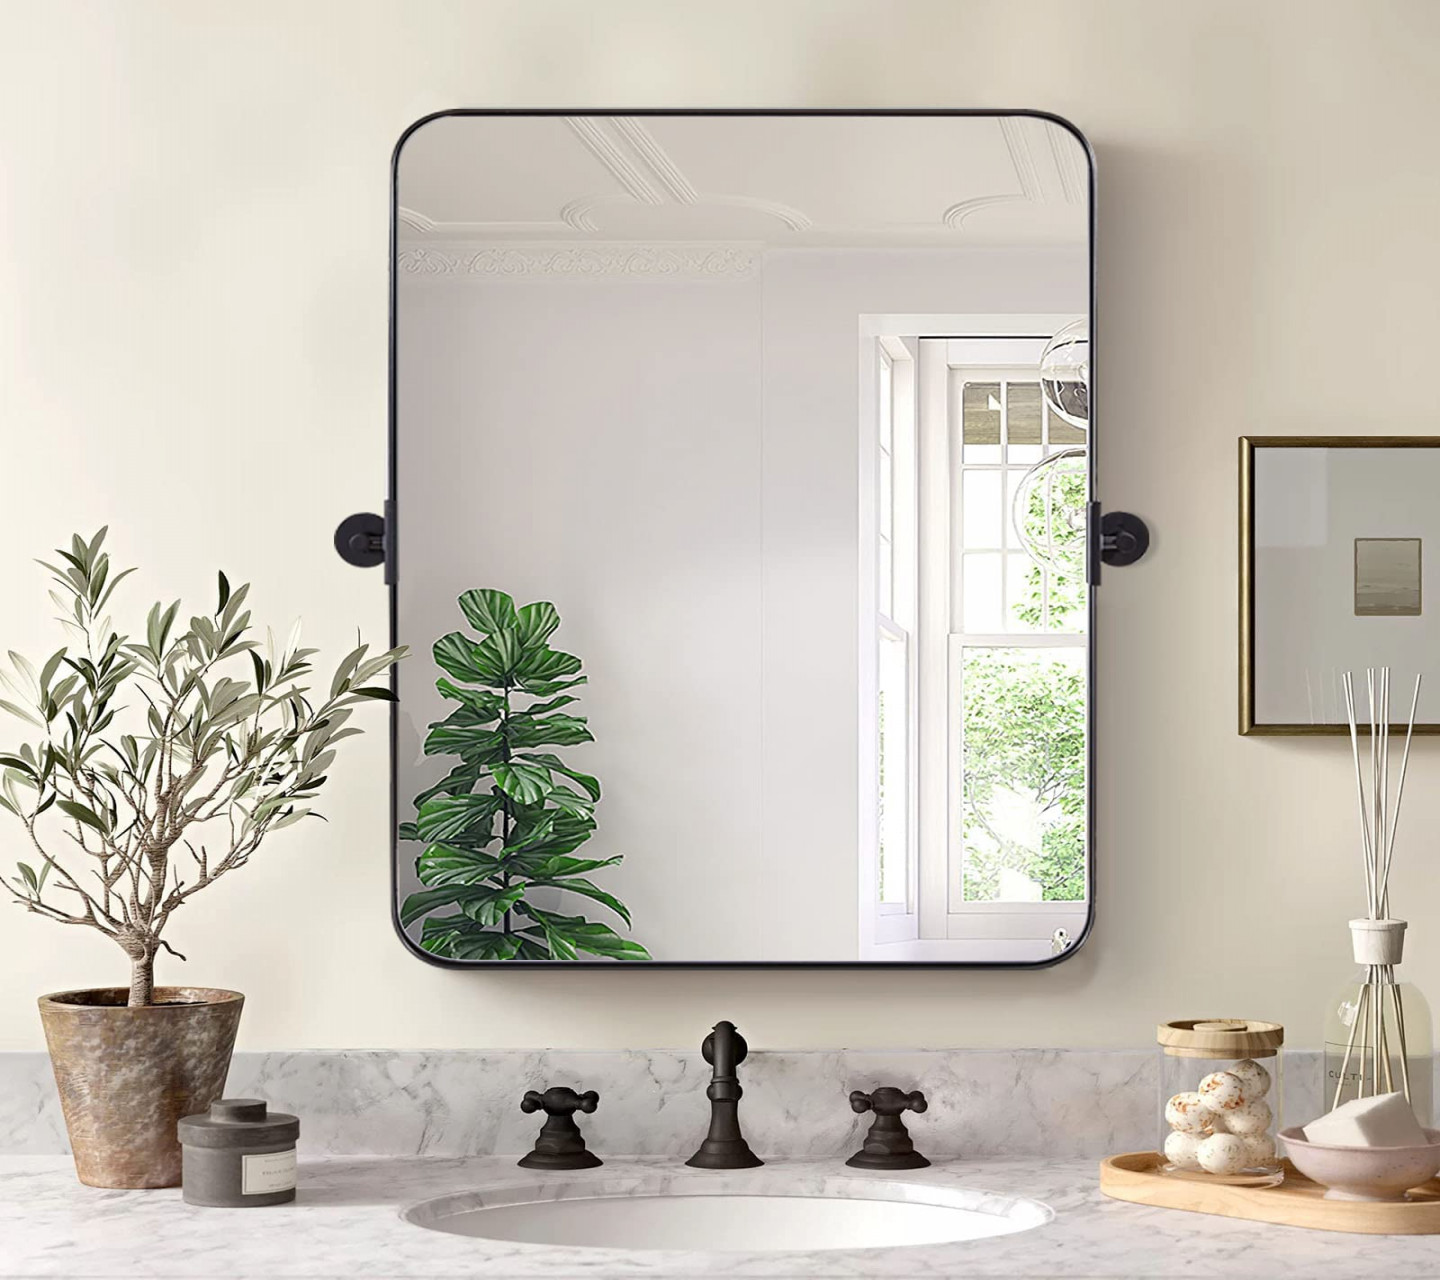 MOON MIRROR " x " Black Metal Framed Pivot Rectangle Bathroom Mirror,  Tilting Rounded Rectangular Vanity Mirror for Wall Mounted Hangs Vertical